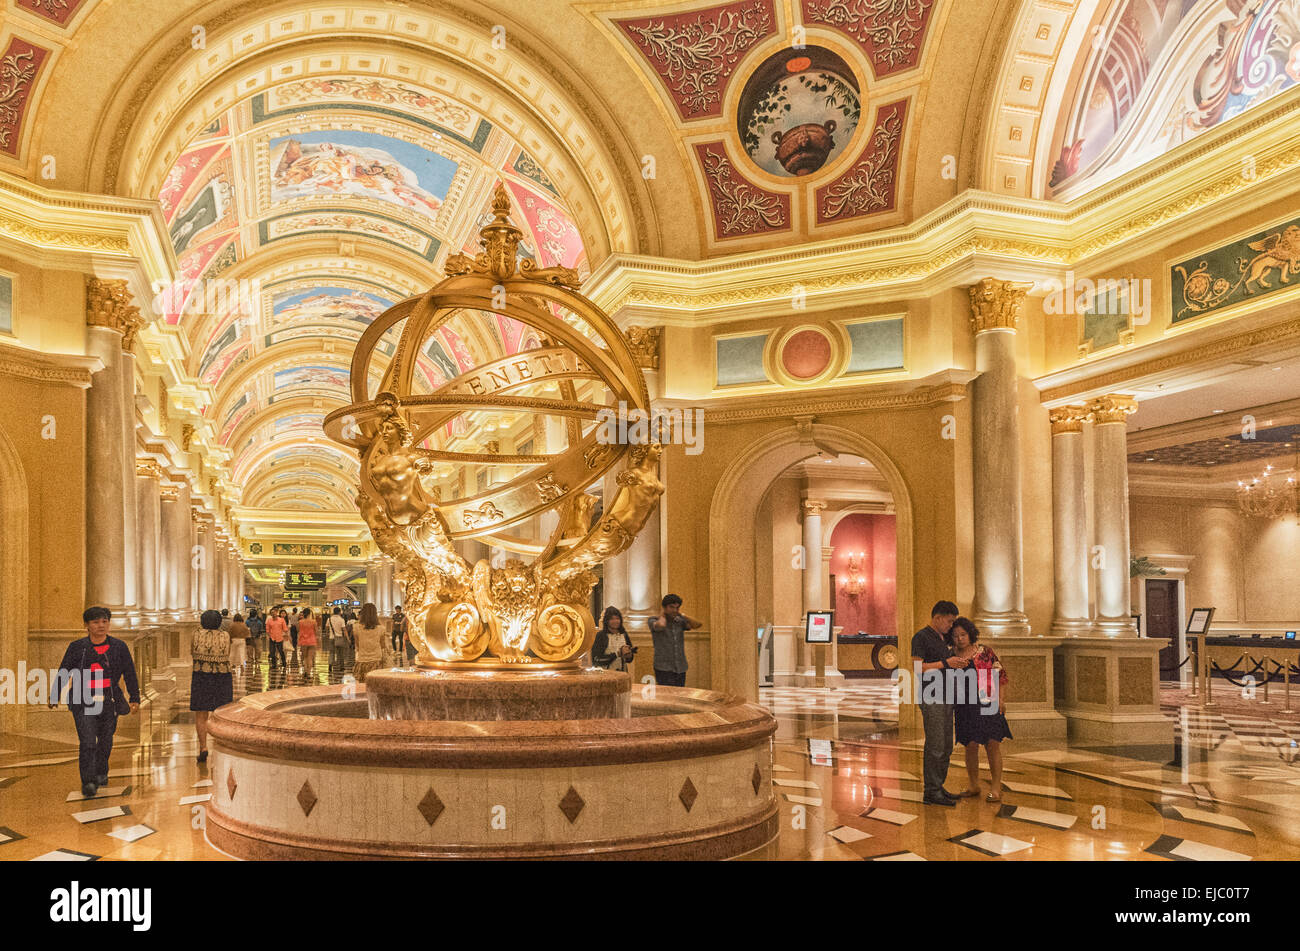 The Venetian Macao casino and hotel Stock Photo